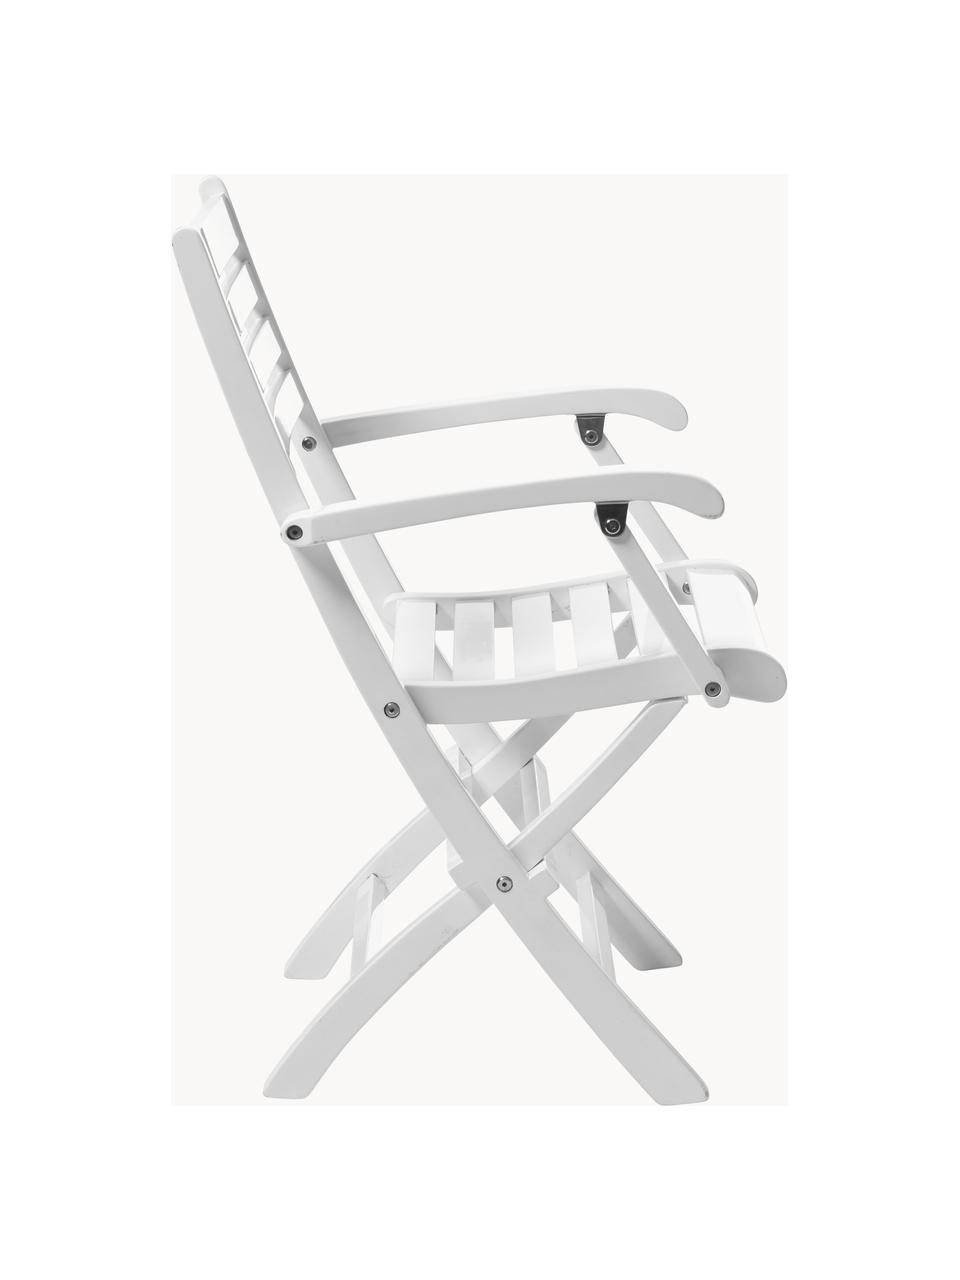 Skládací zahradní židle York, Mahagonové dřevo
Certifikace V-Legal, Bílá, Š 52 cm, H 53 cm